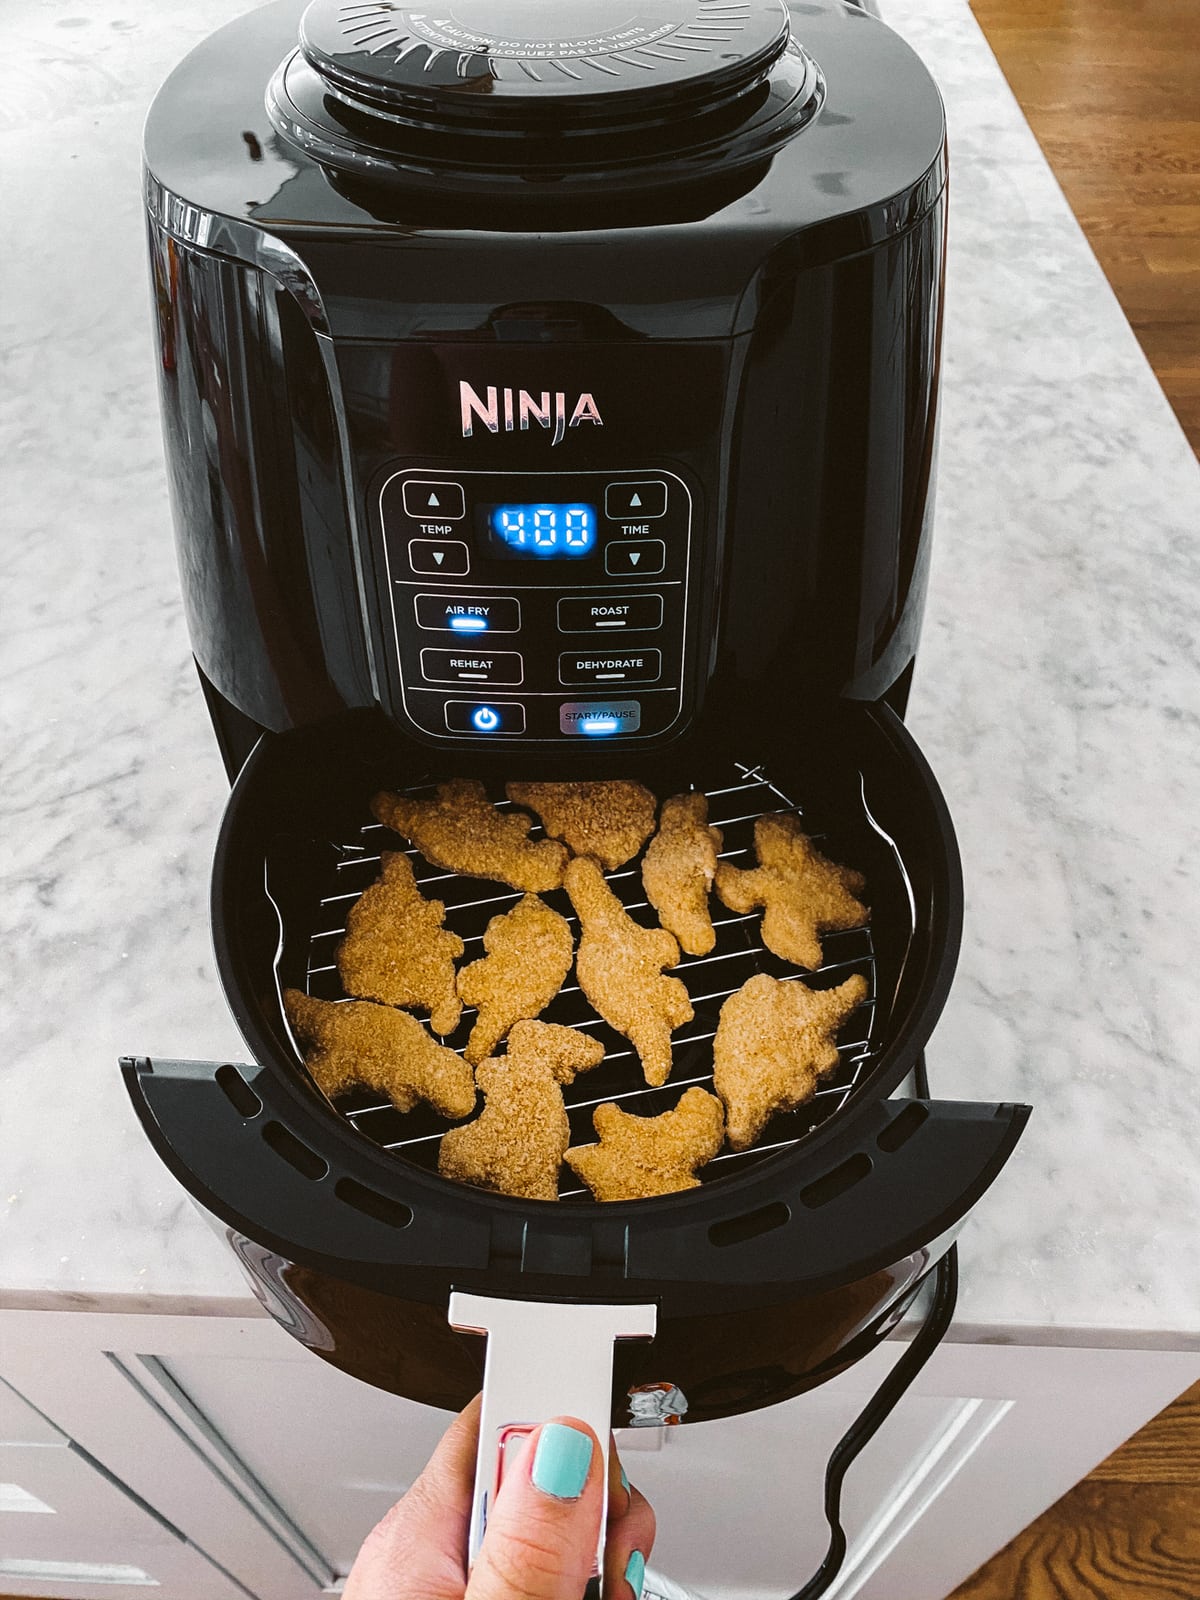 Ninja Hot Air Fryer